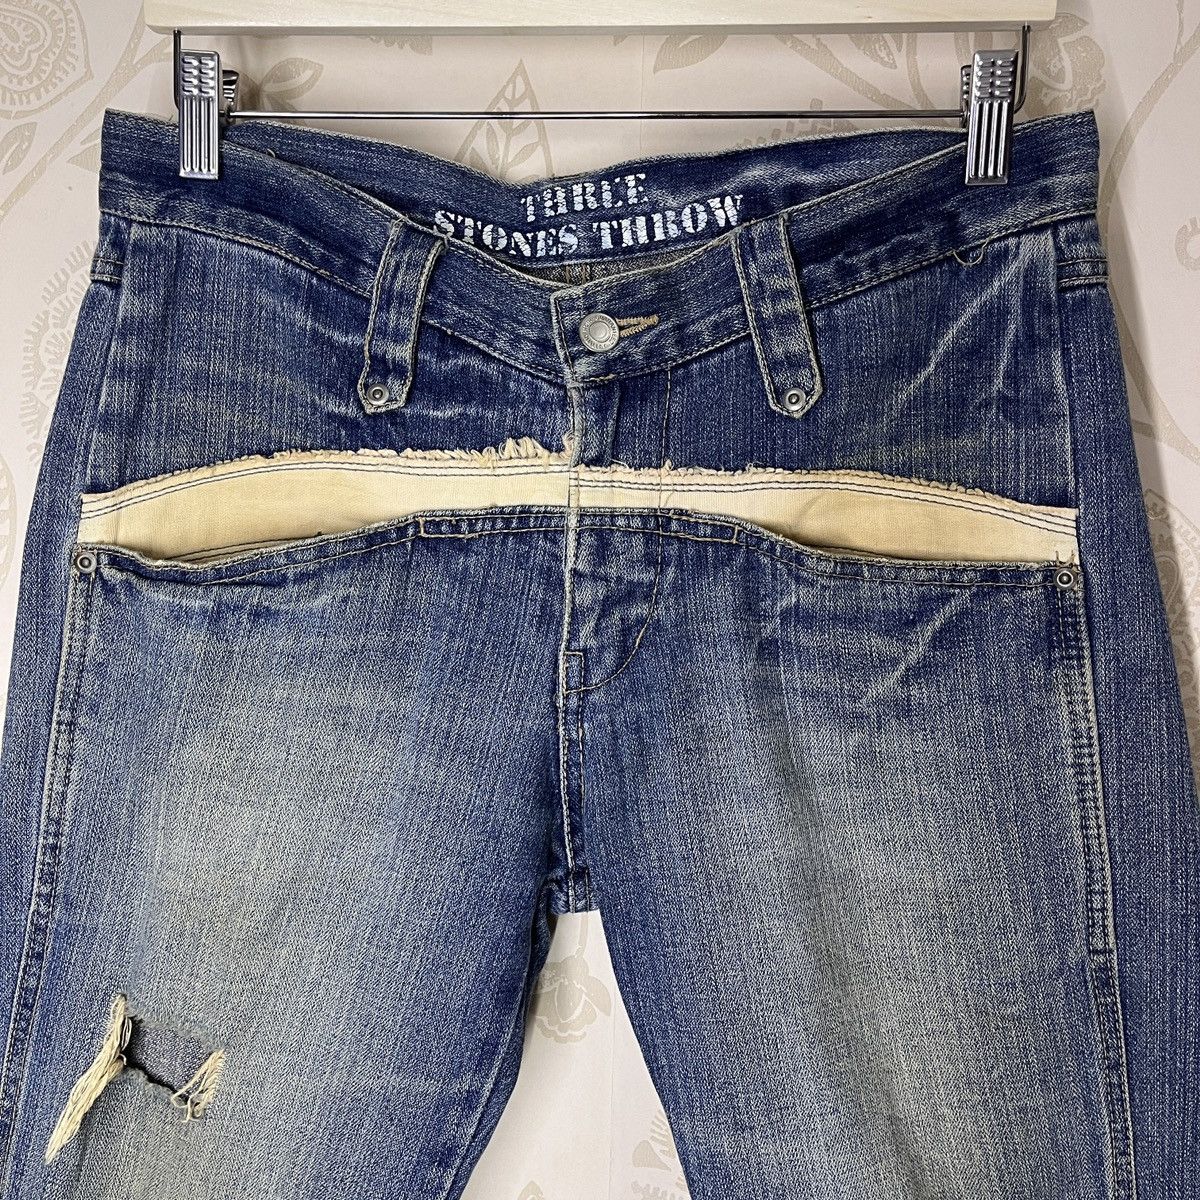 Ripped Three Stones Throw Denim Jeans Avant Garde Pockets - 5